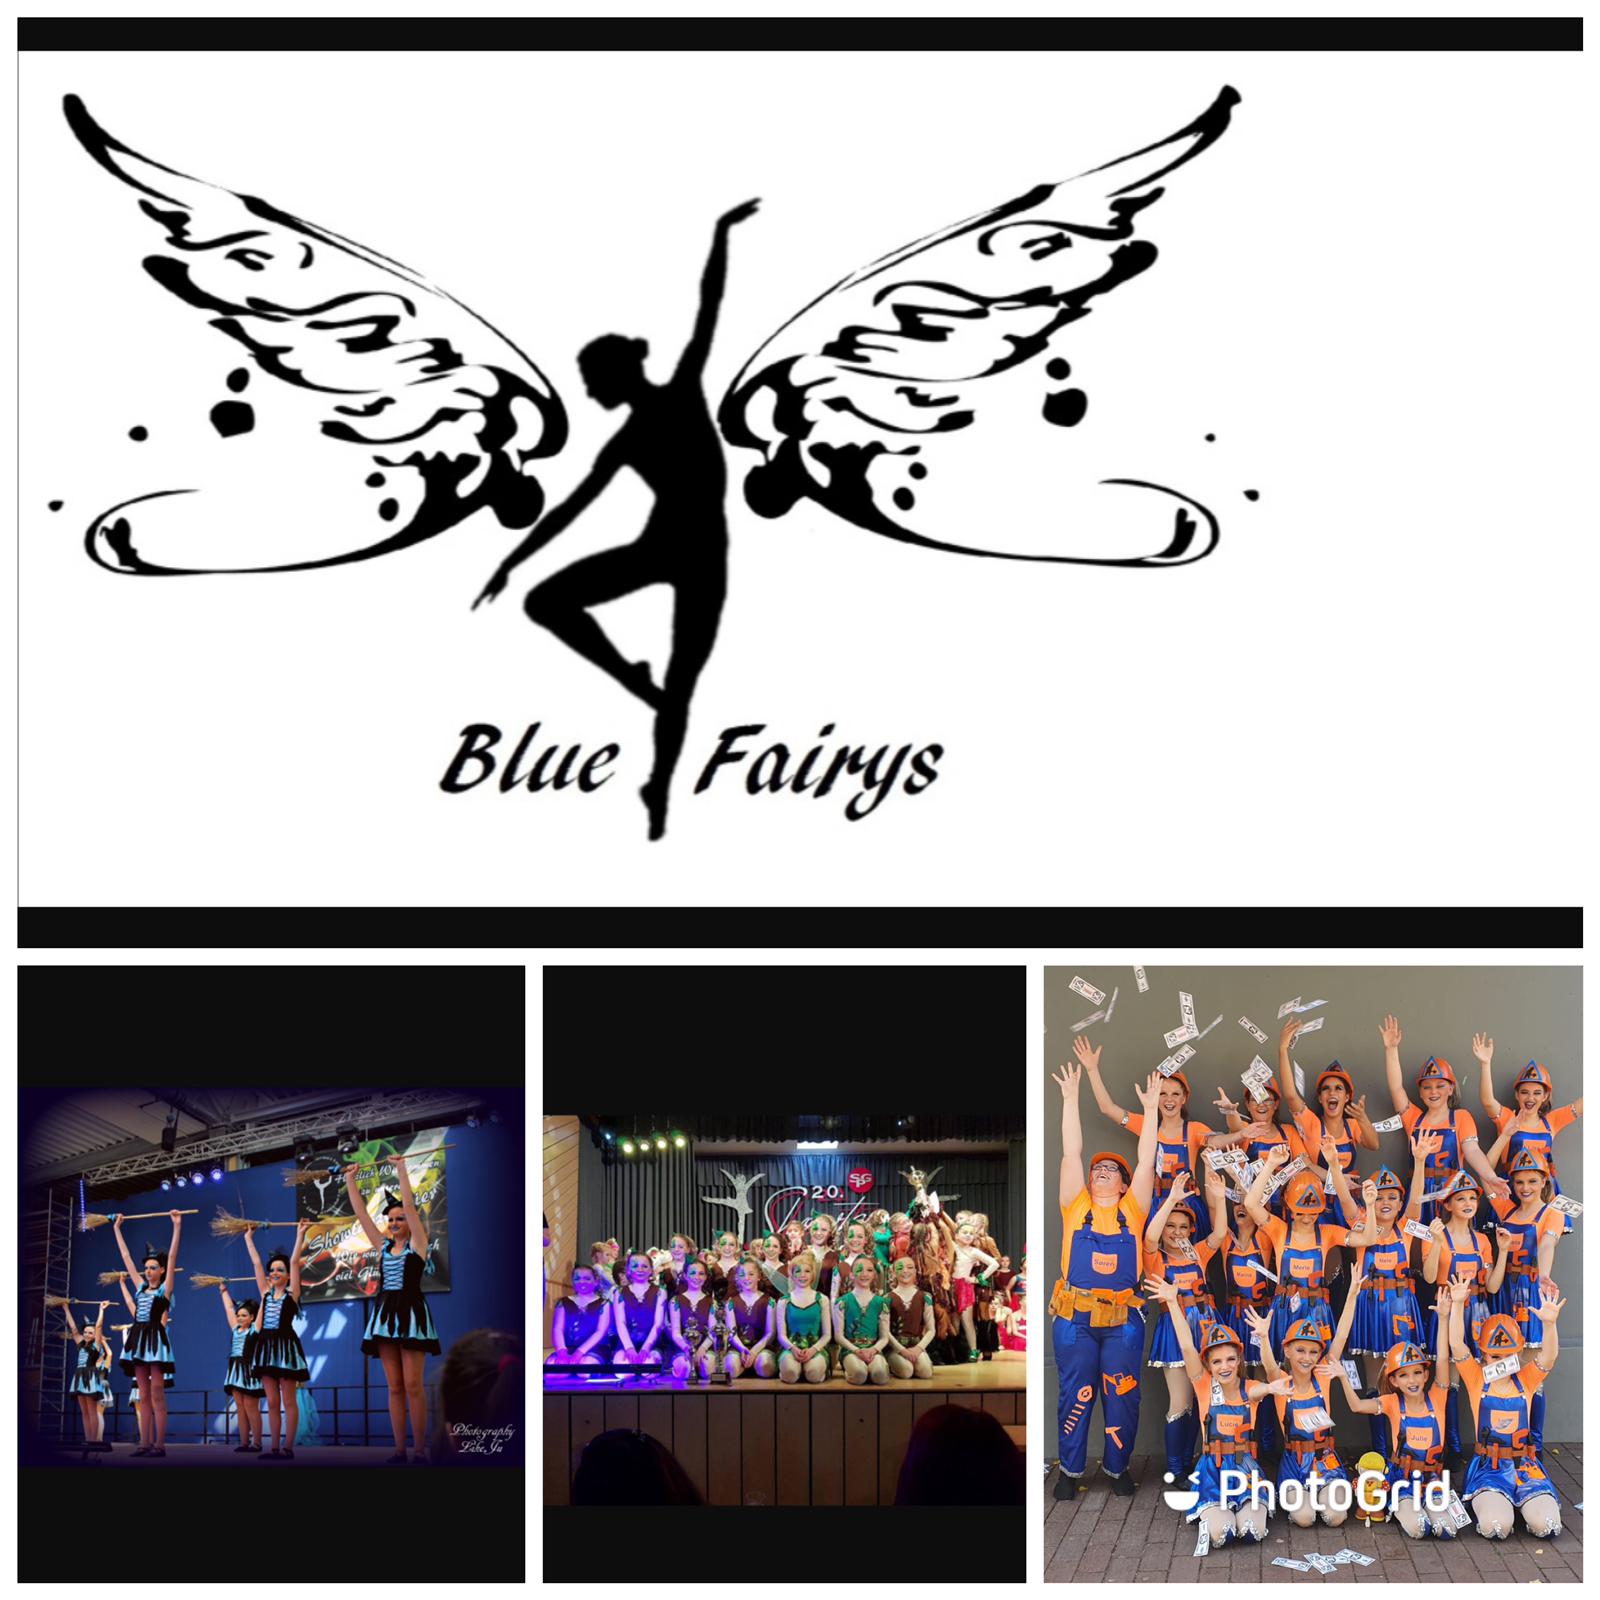 Blue Fairys wir suchen dich